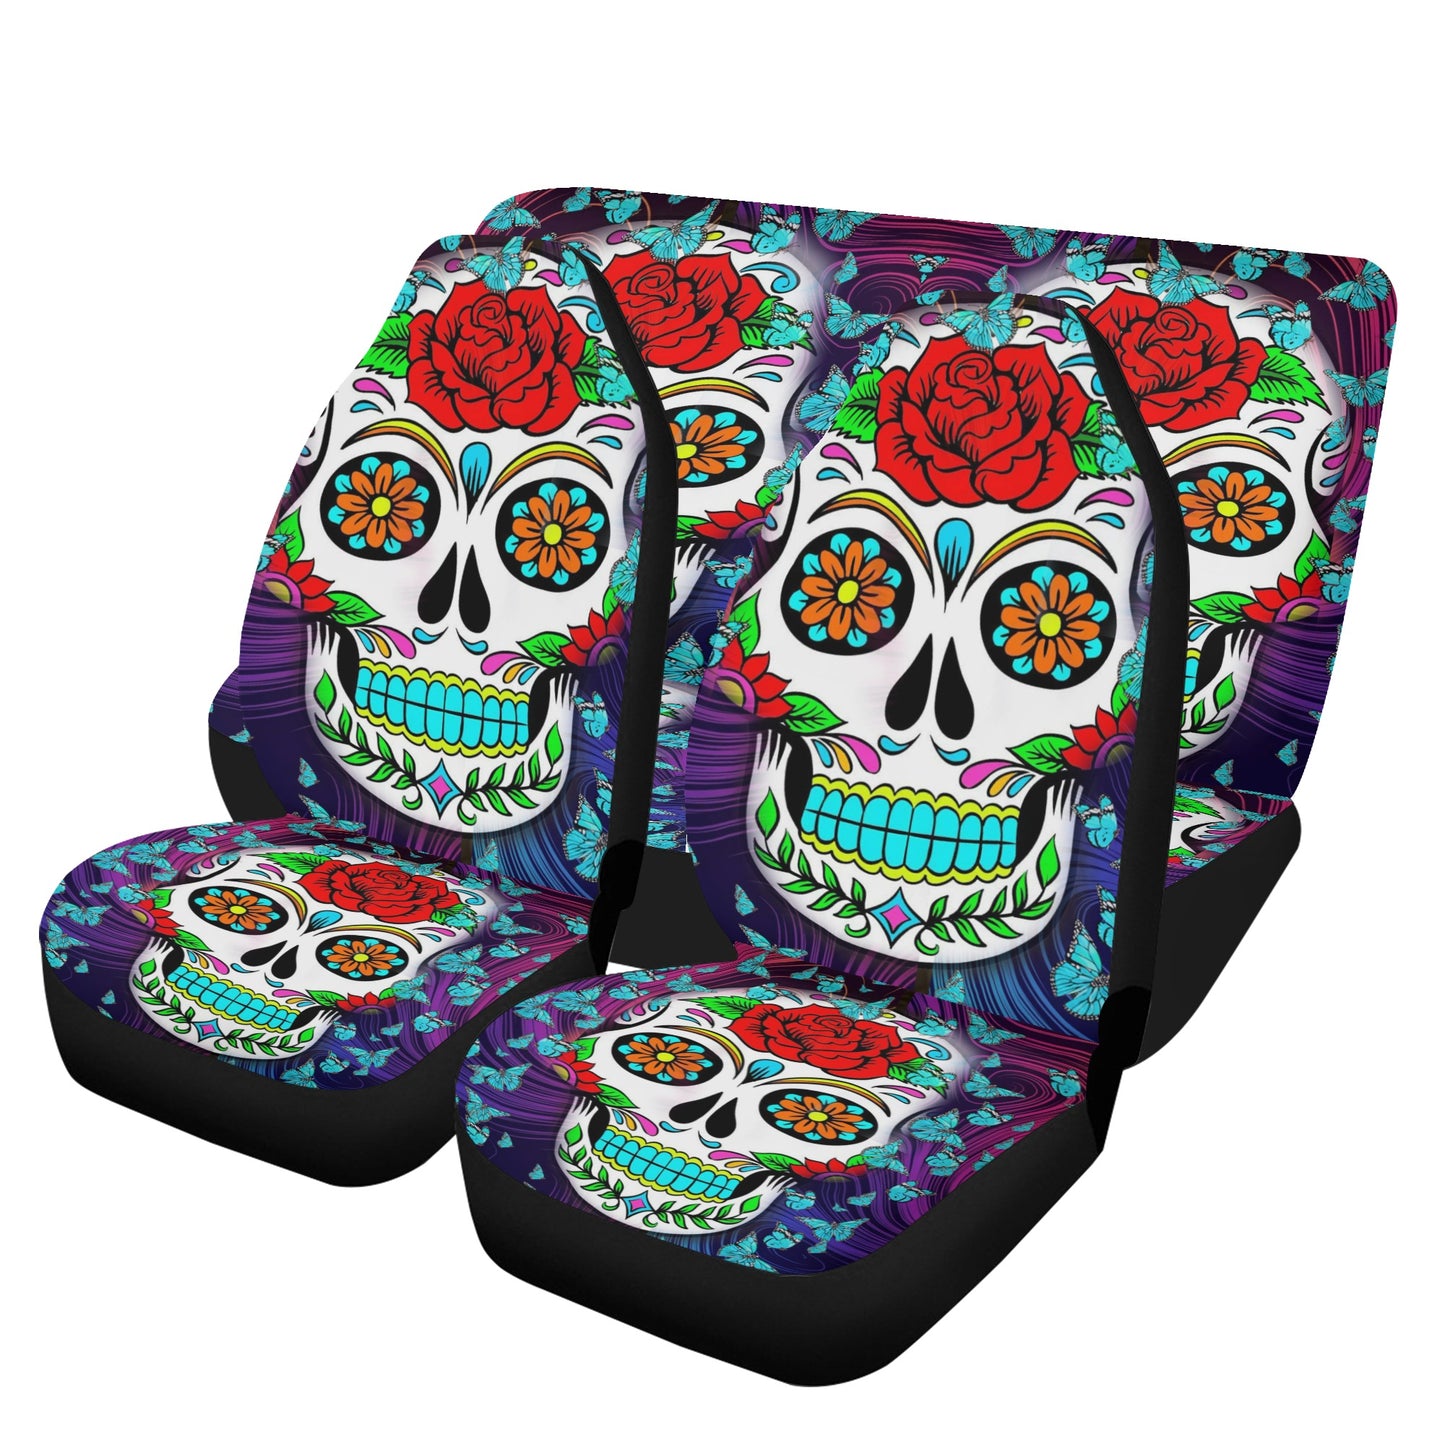 Mexico seat cover for car, sugar skull car accessories, calaveras skull car seat cushion cover, sugar skull car seat protector, day of the d